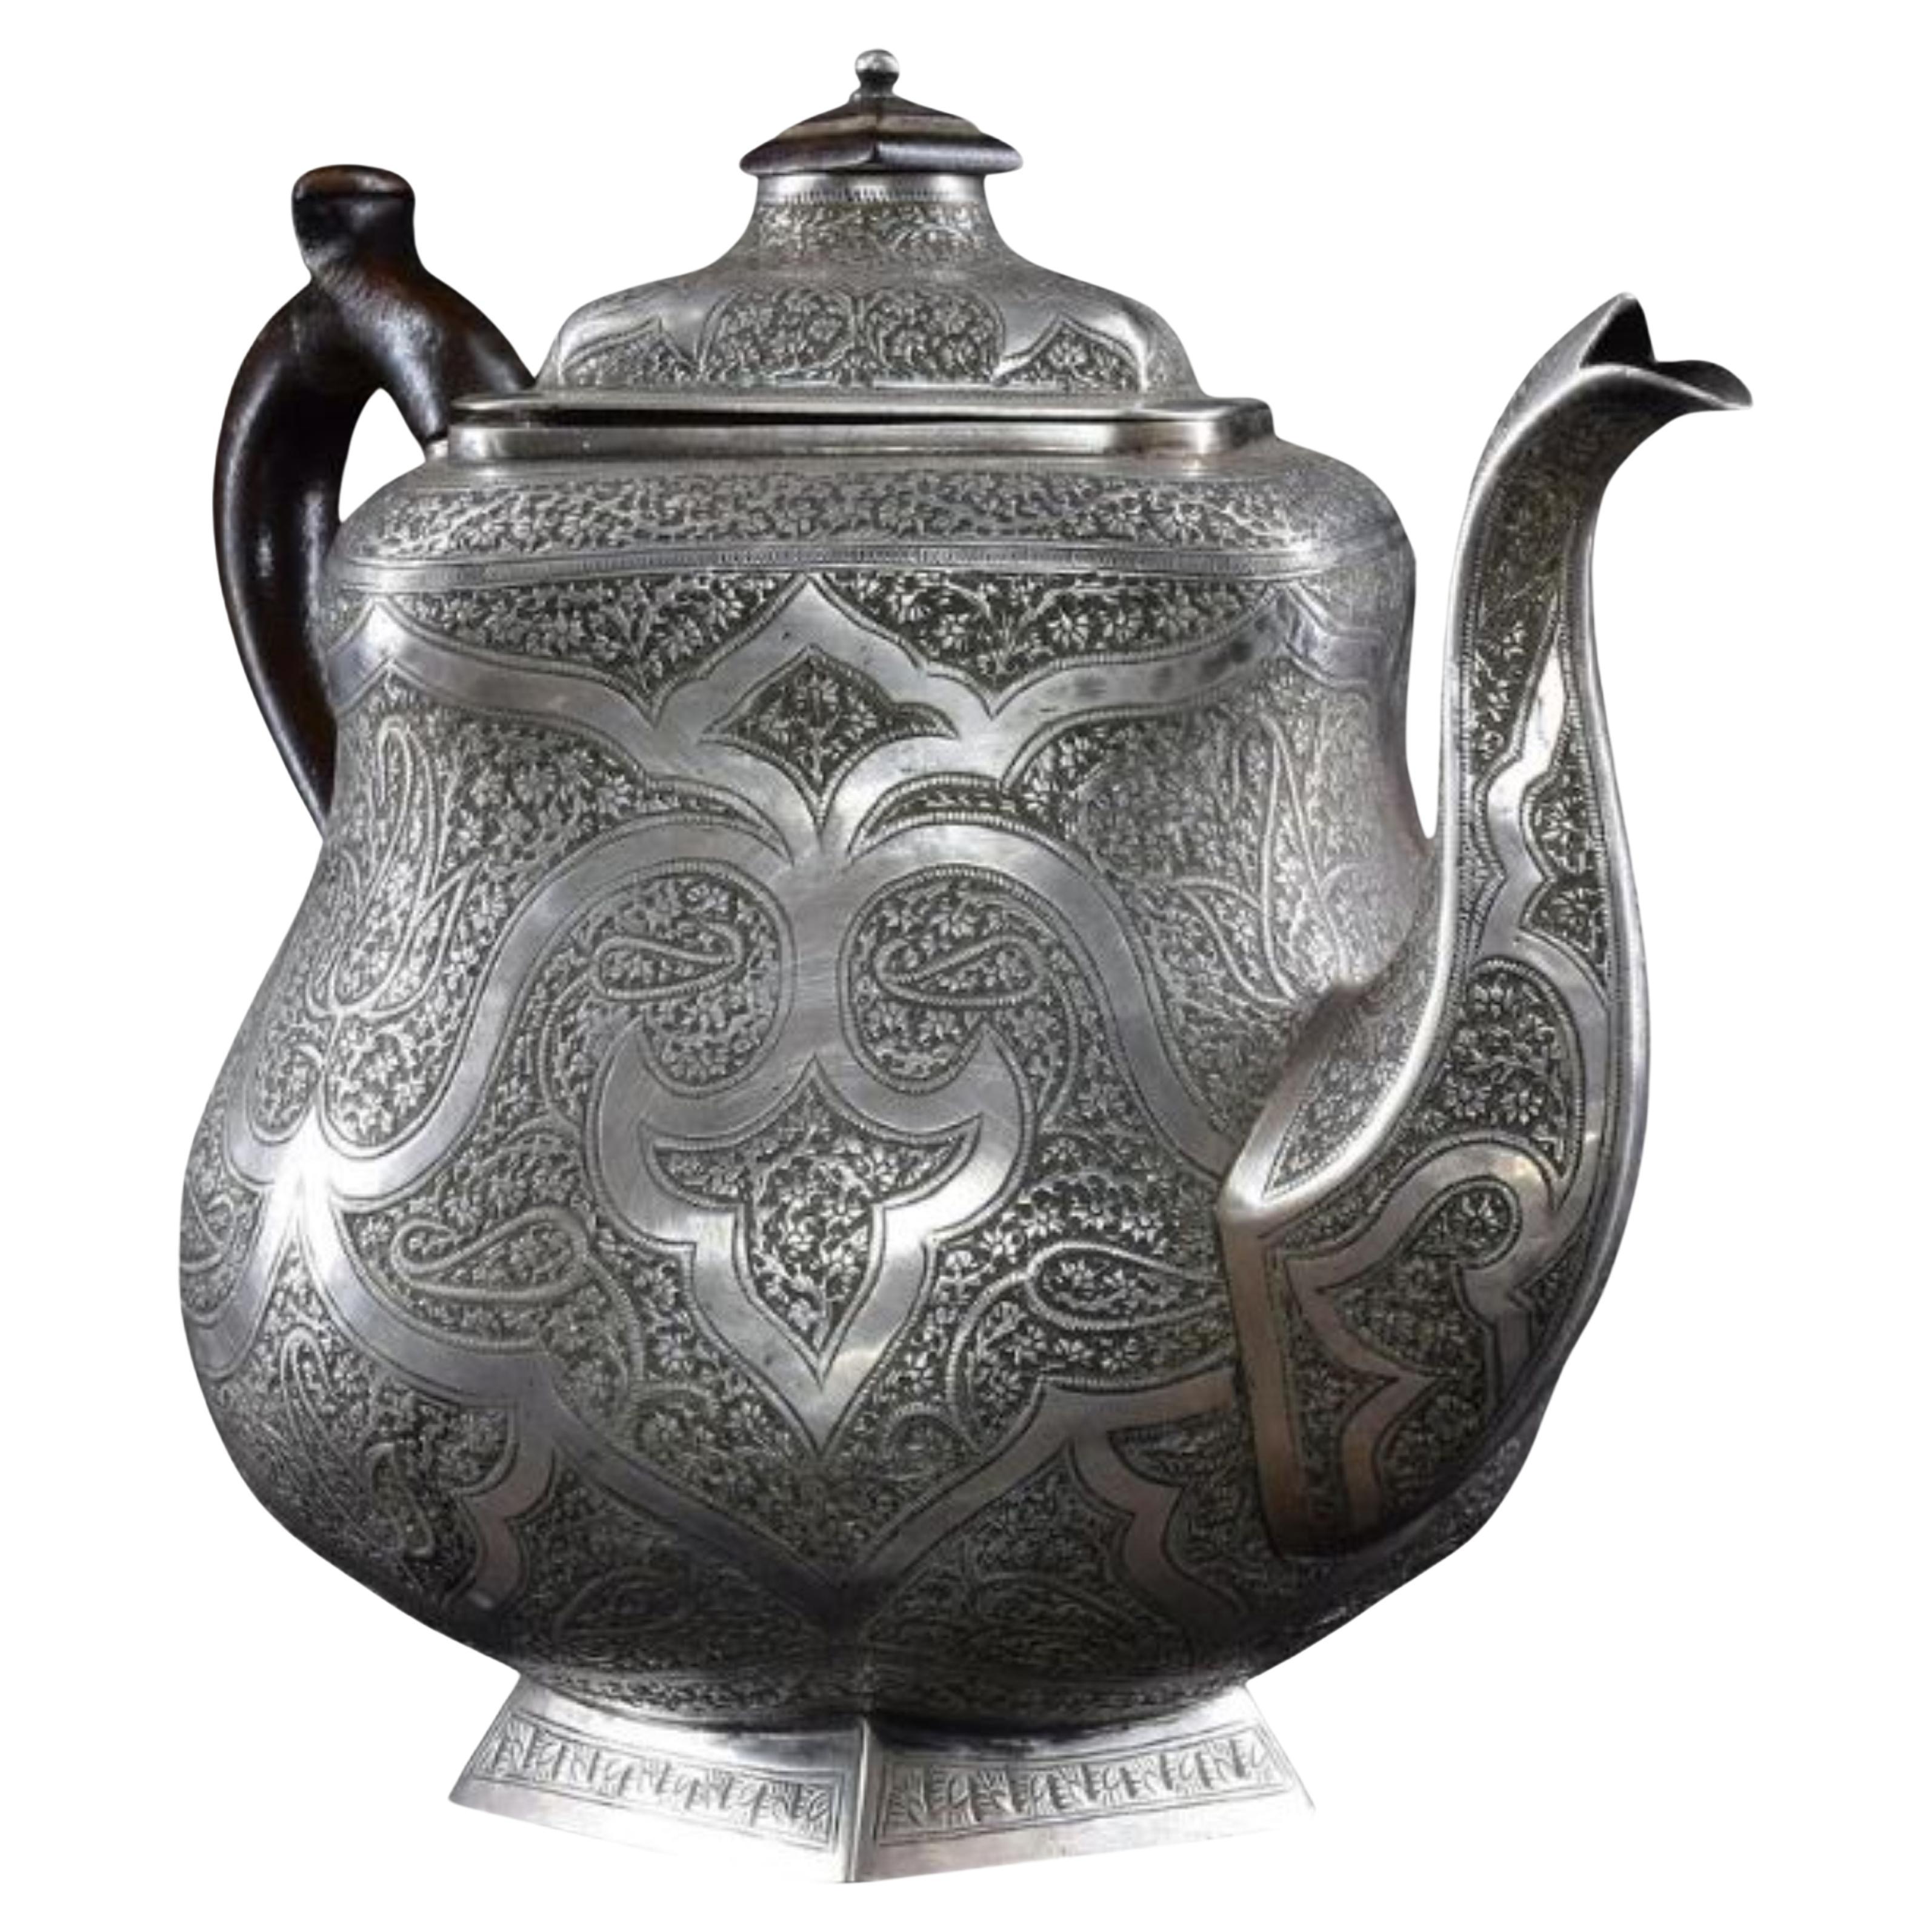 1950s Large Traditional Engraved Sterling Silver Teapot (Théière en argent sterling gravée)